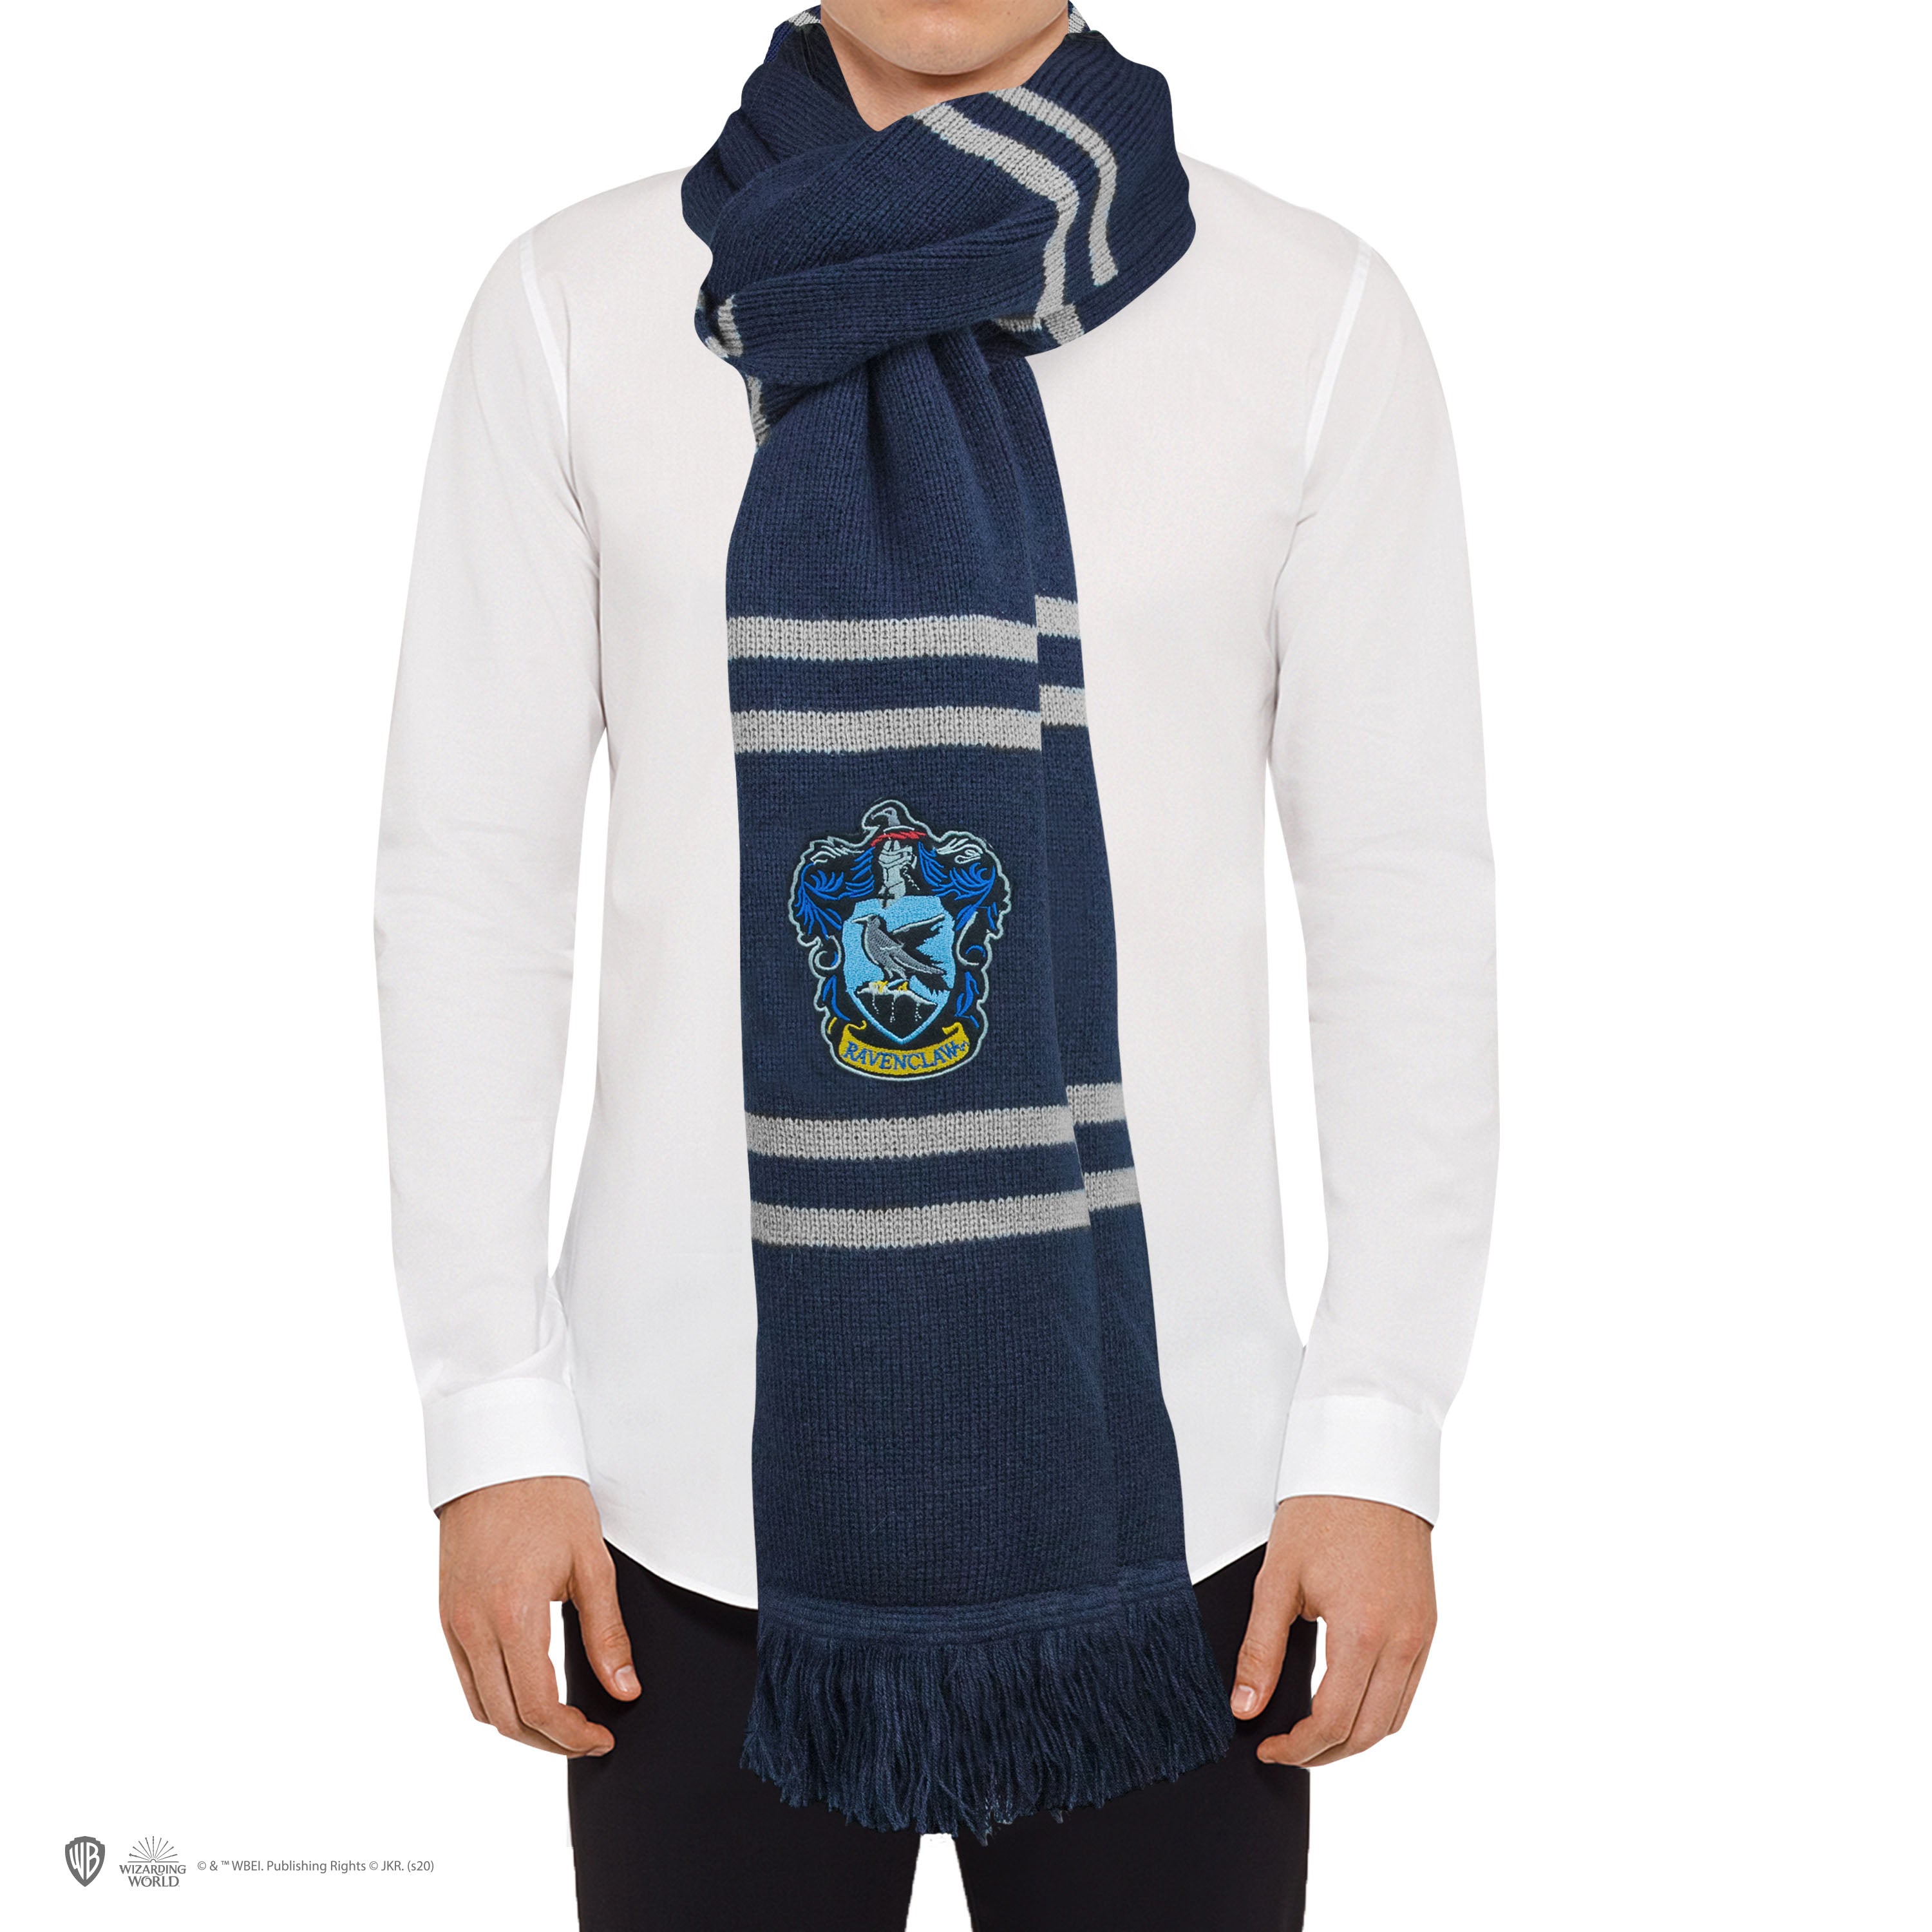 Echarpe Harry Potter / Serdaigle - Harry Potter's scarf